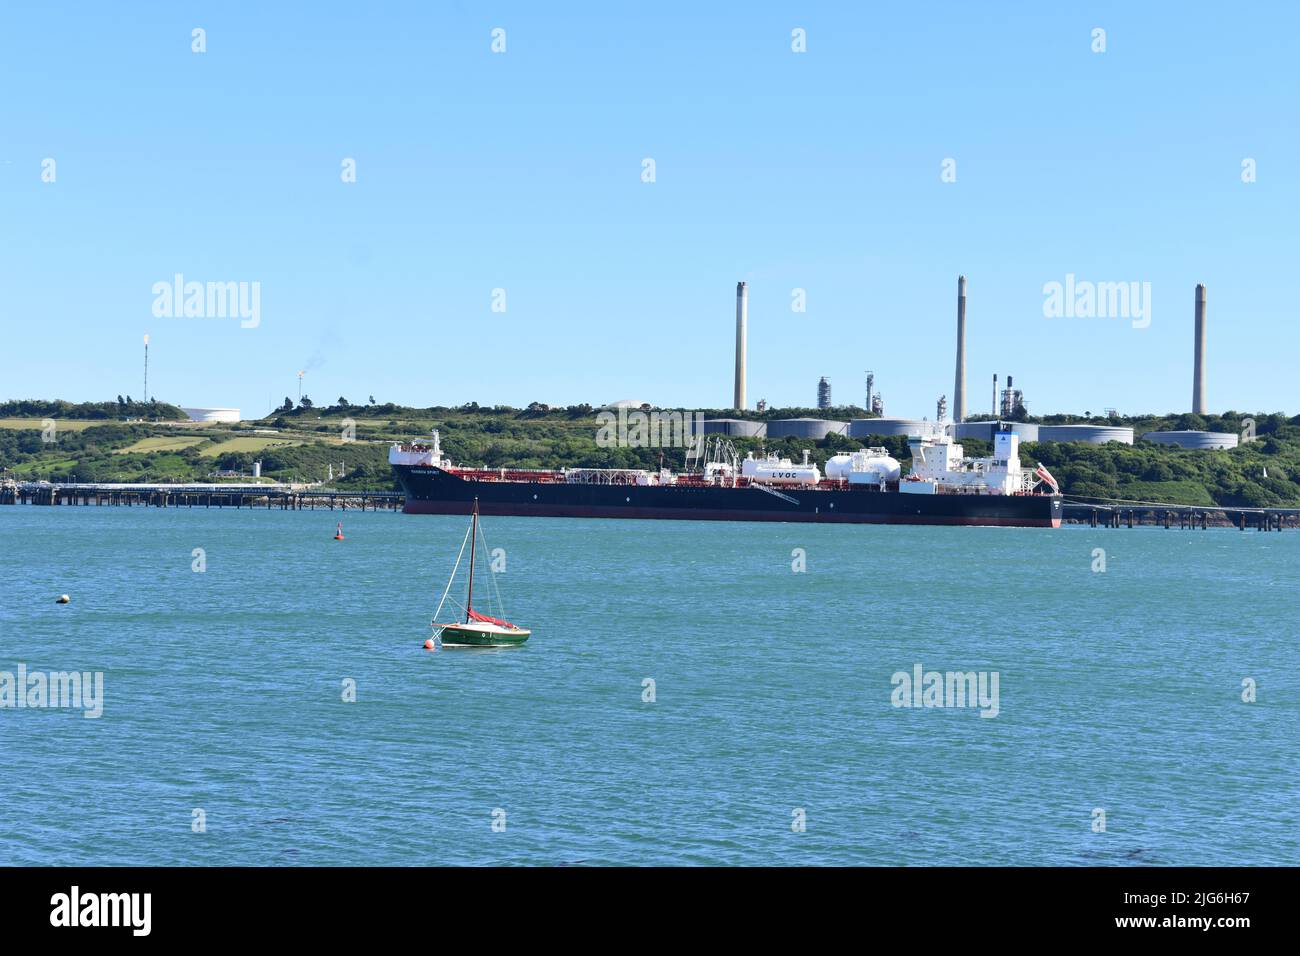 Oil tanker docked at the Valero Pembroke Refinery, Pembroke, Pembrokeshire, Wales Stock Photo